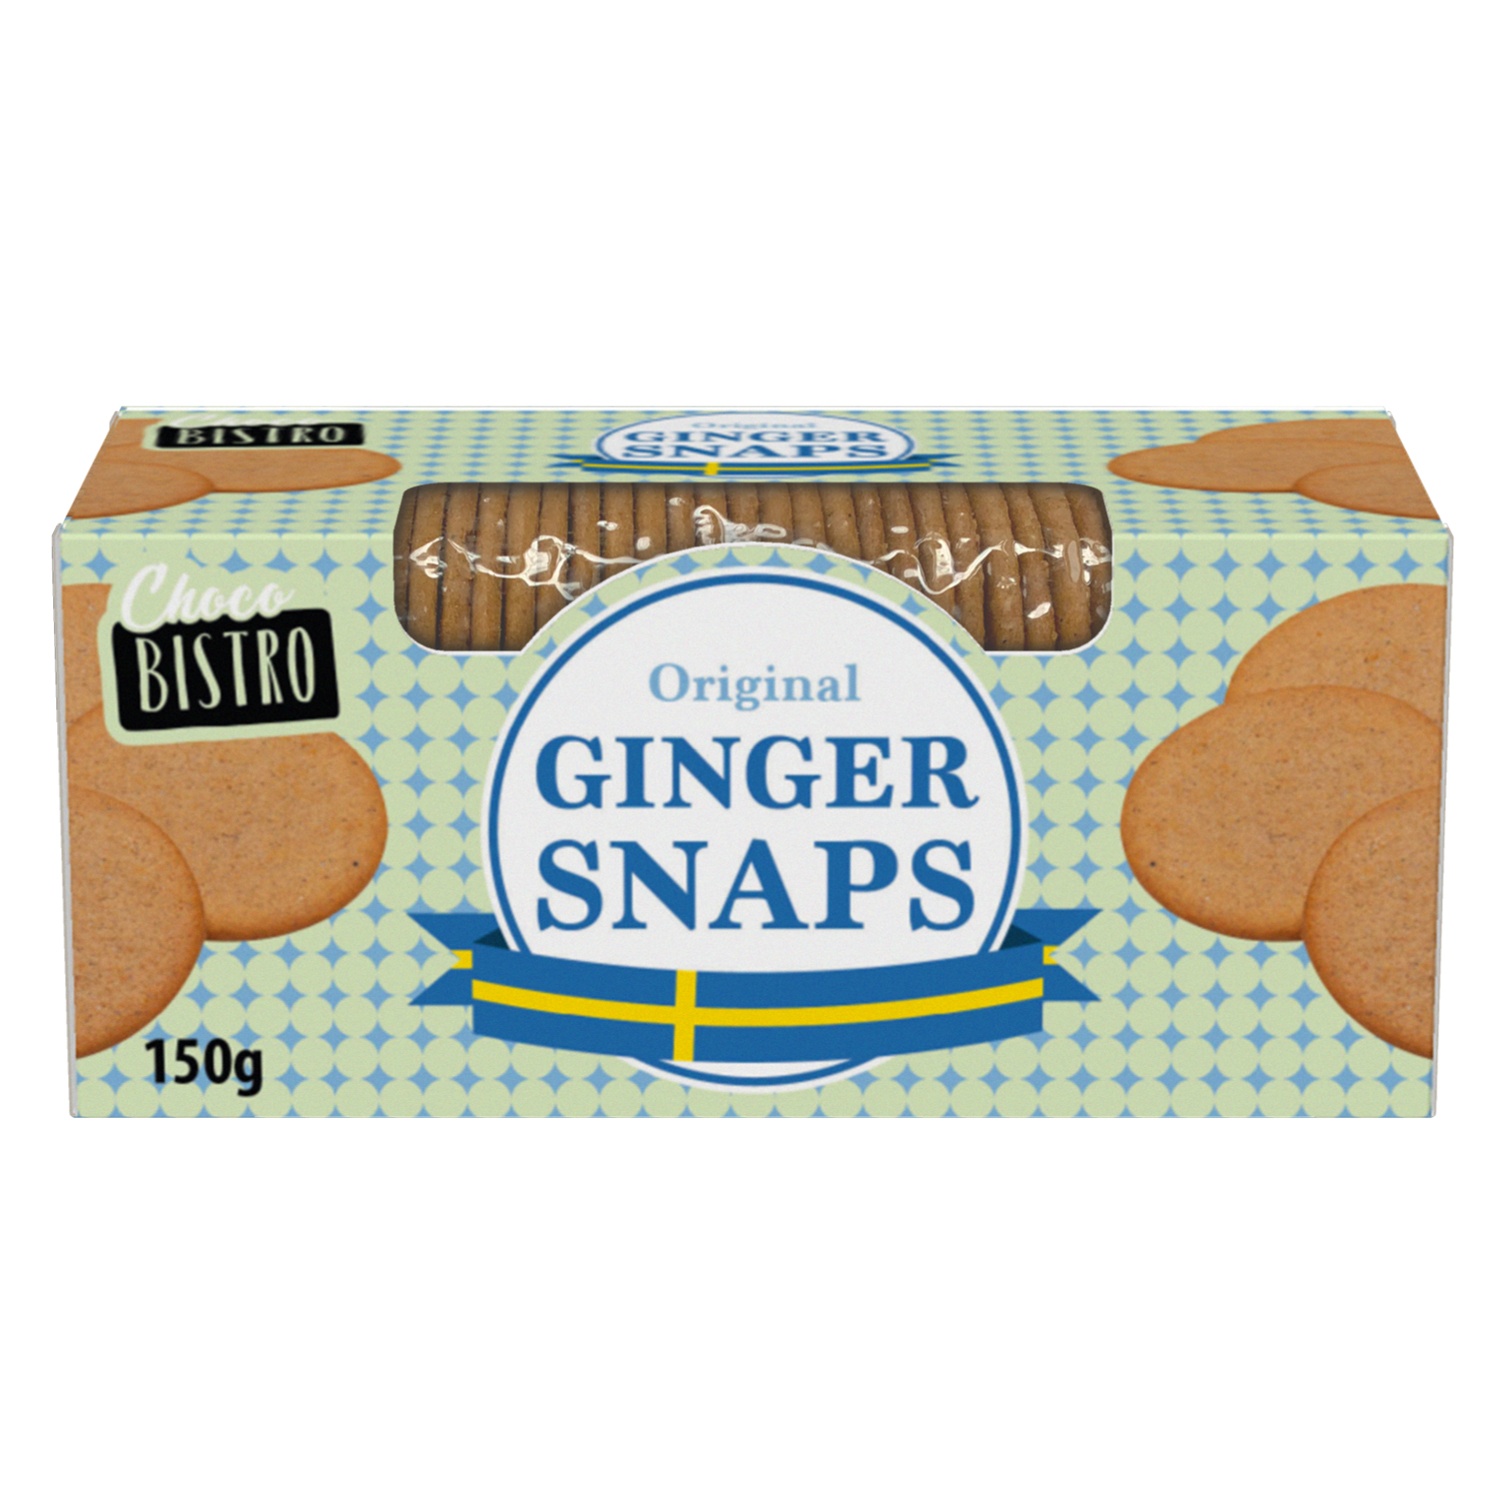 Choco BISTRO Ginger Snaps 150 g